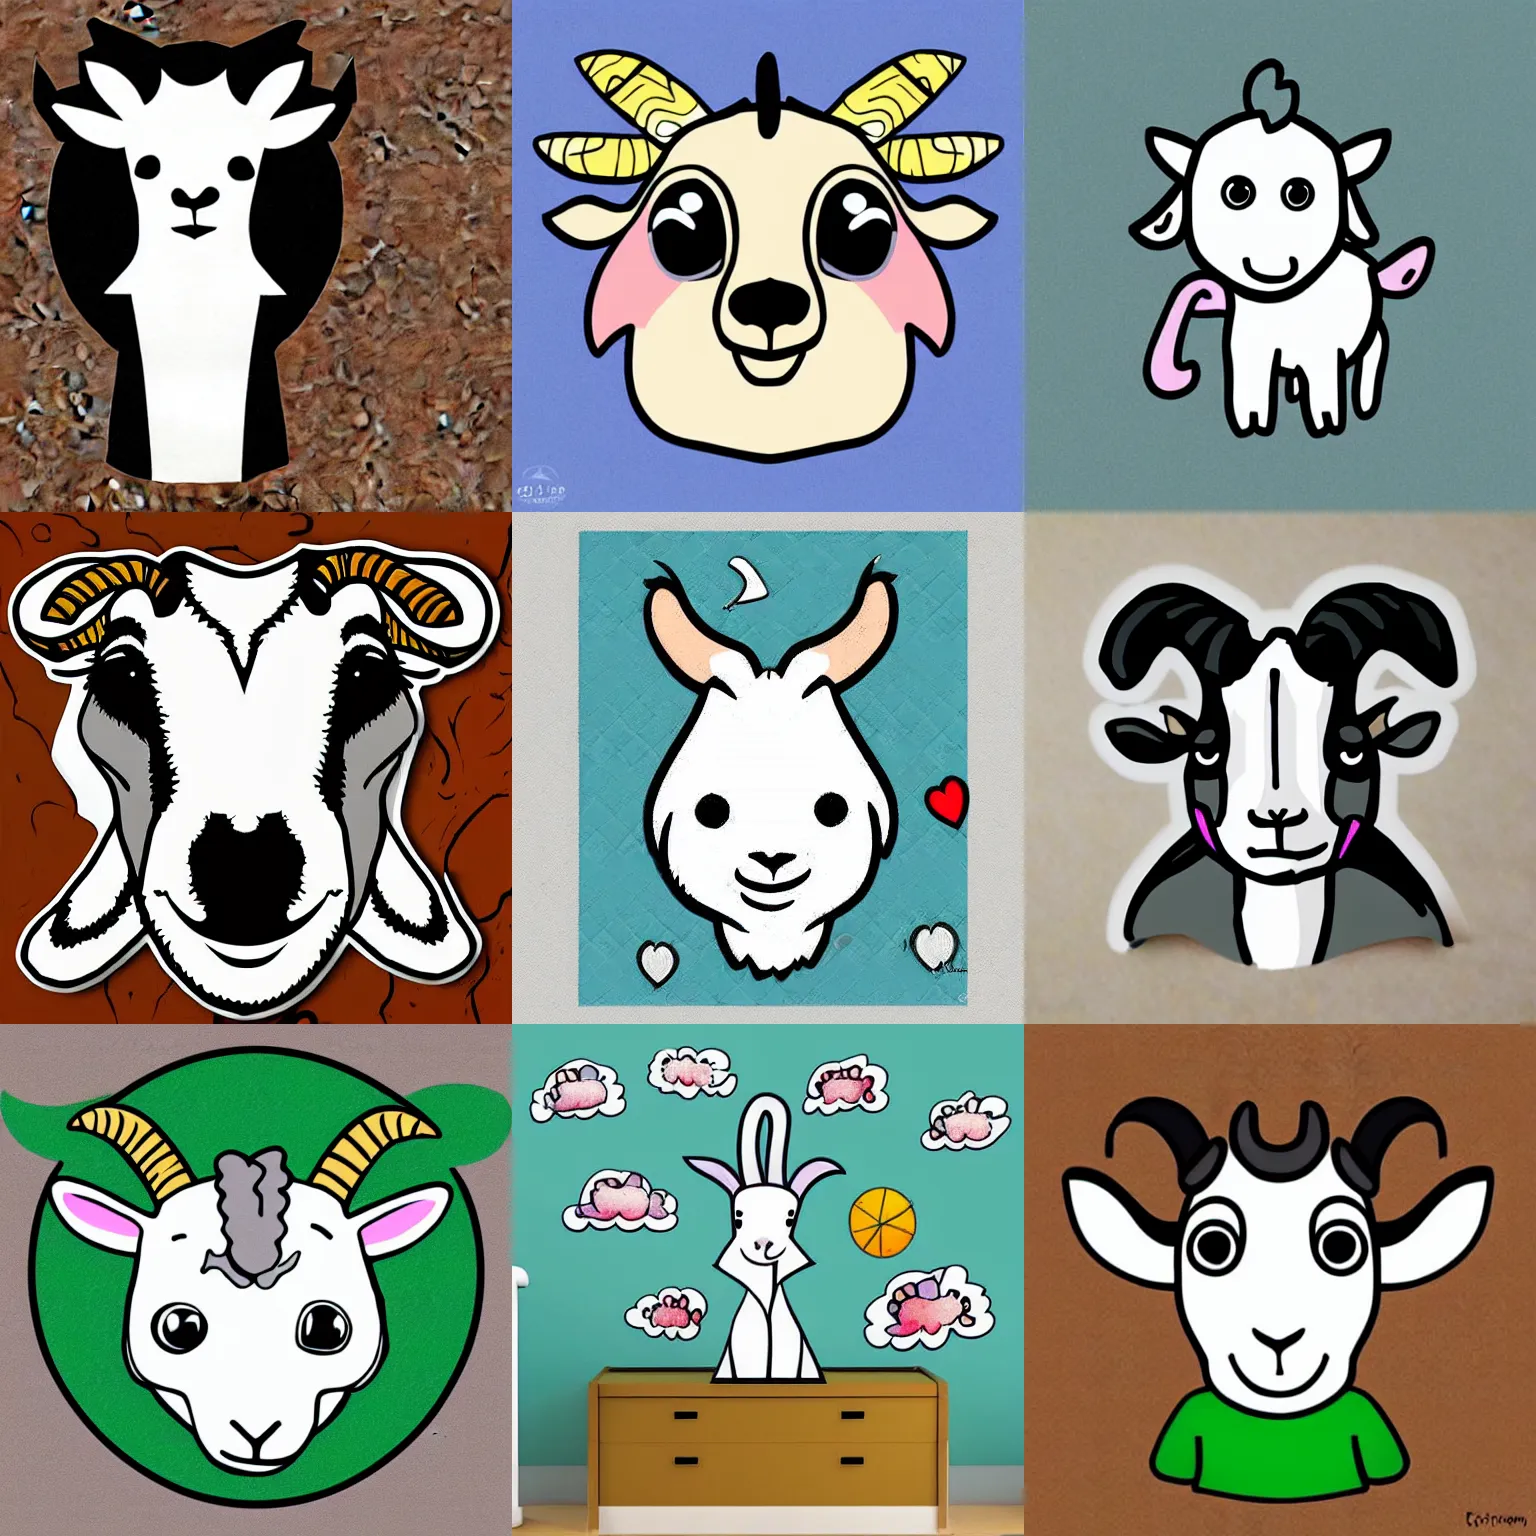 Prompt: adorable goat art cartoon sticker profile picture